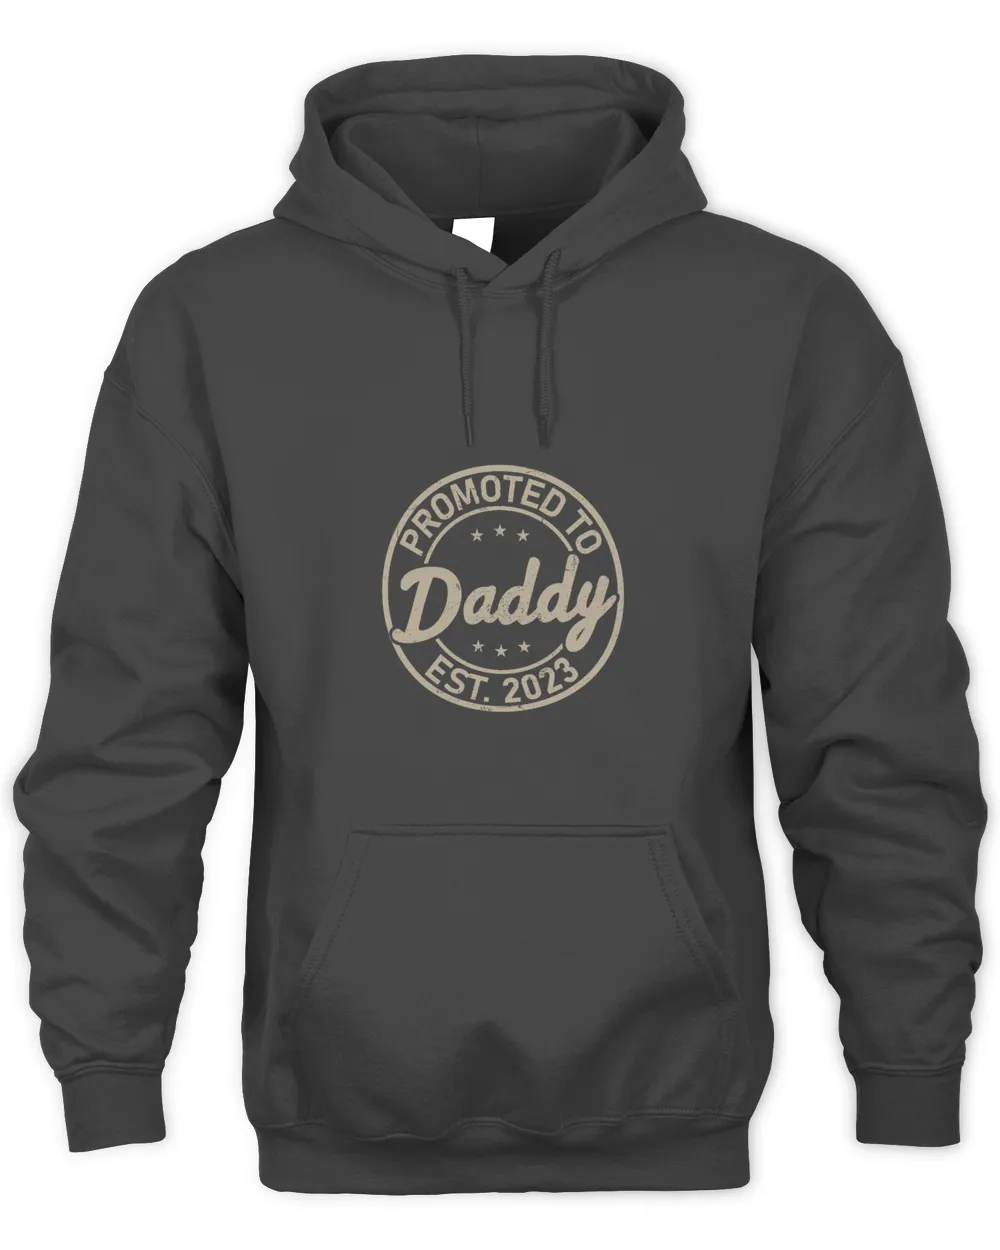 Promoted To Daddy Shirt Sweatshirt Hoodie, Fathers day Shirt, Father's Day t Shirts, Fathers day Shirt Idea NLSFD046